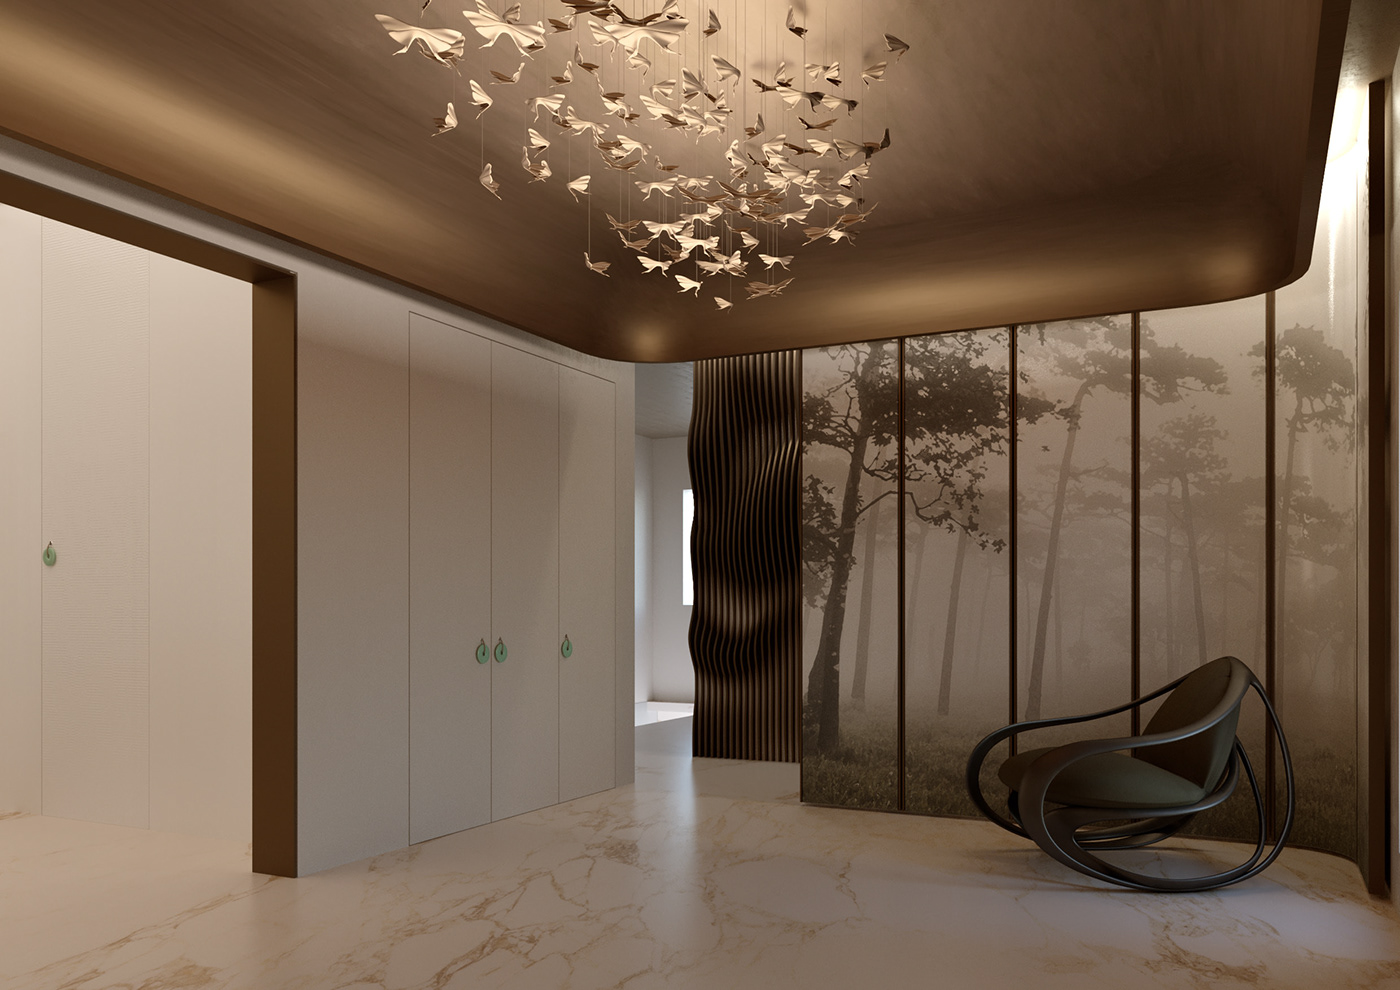 corona luxury Giorgetti Interior design wood bedroom living lounge